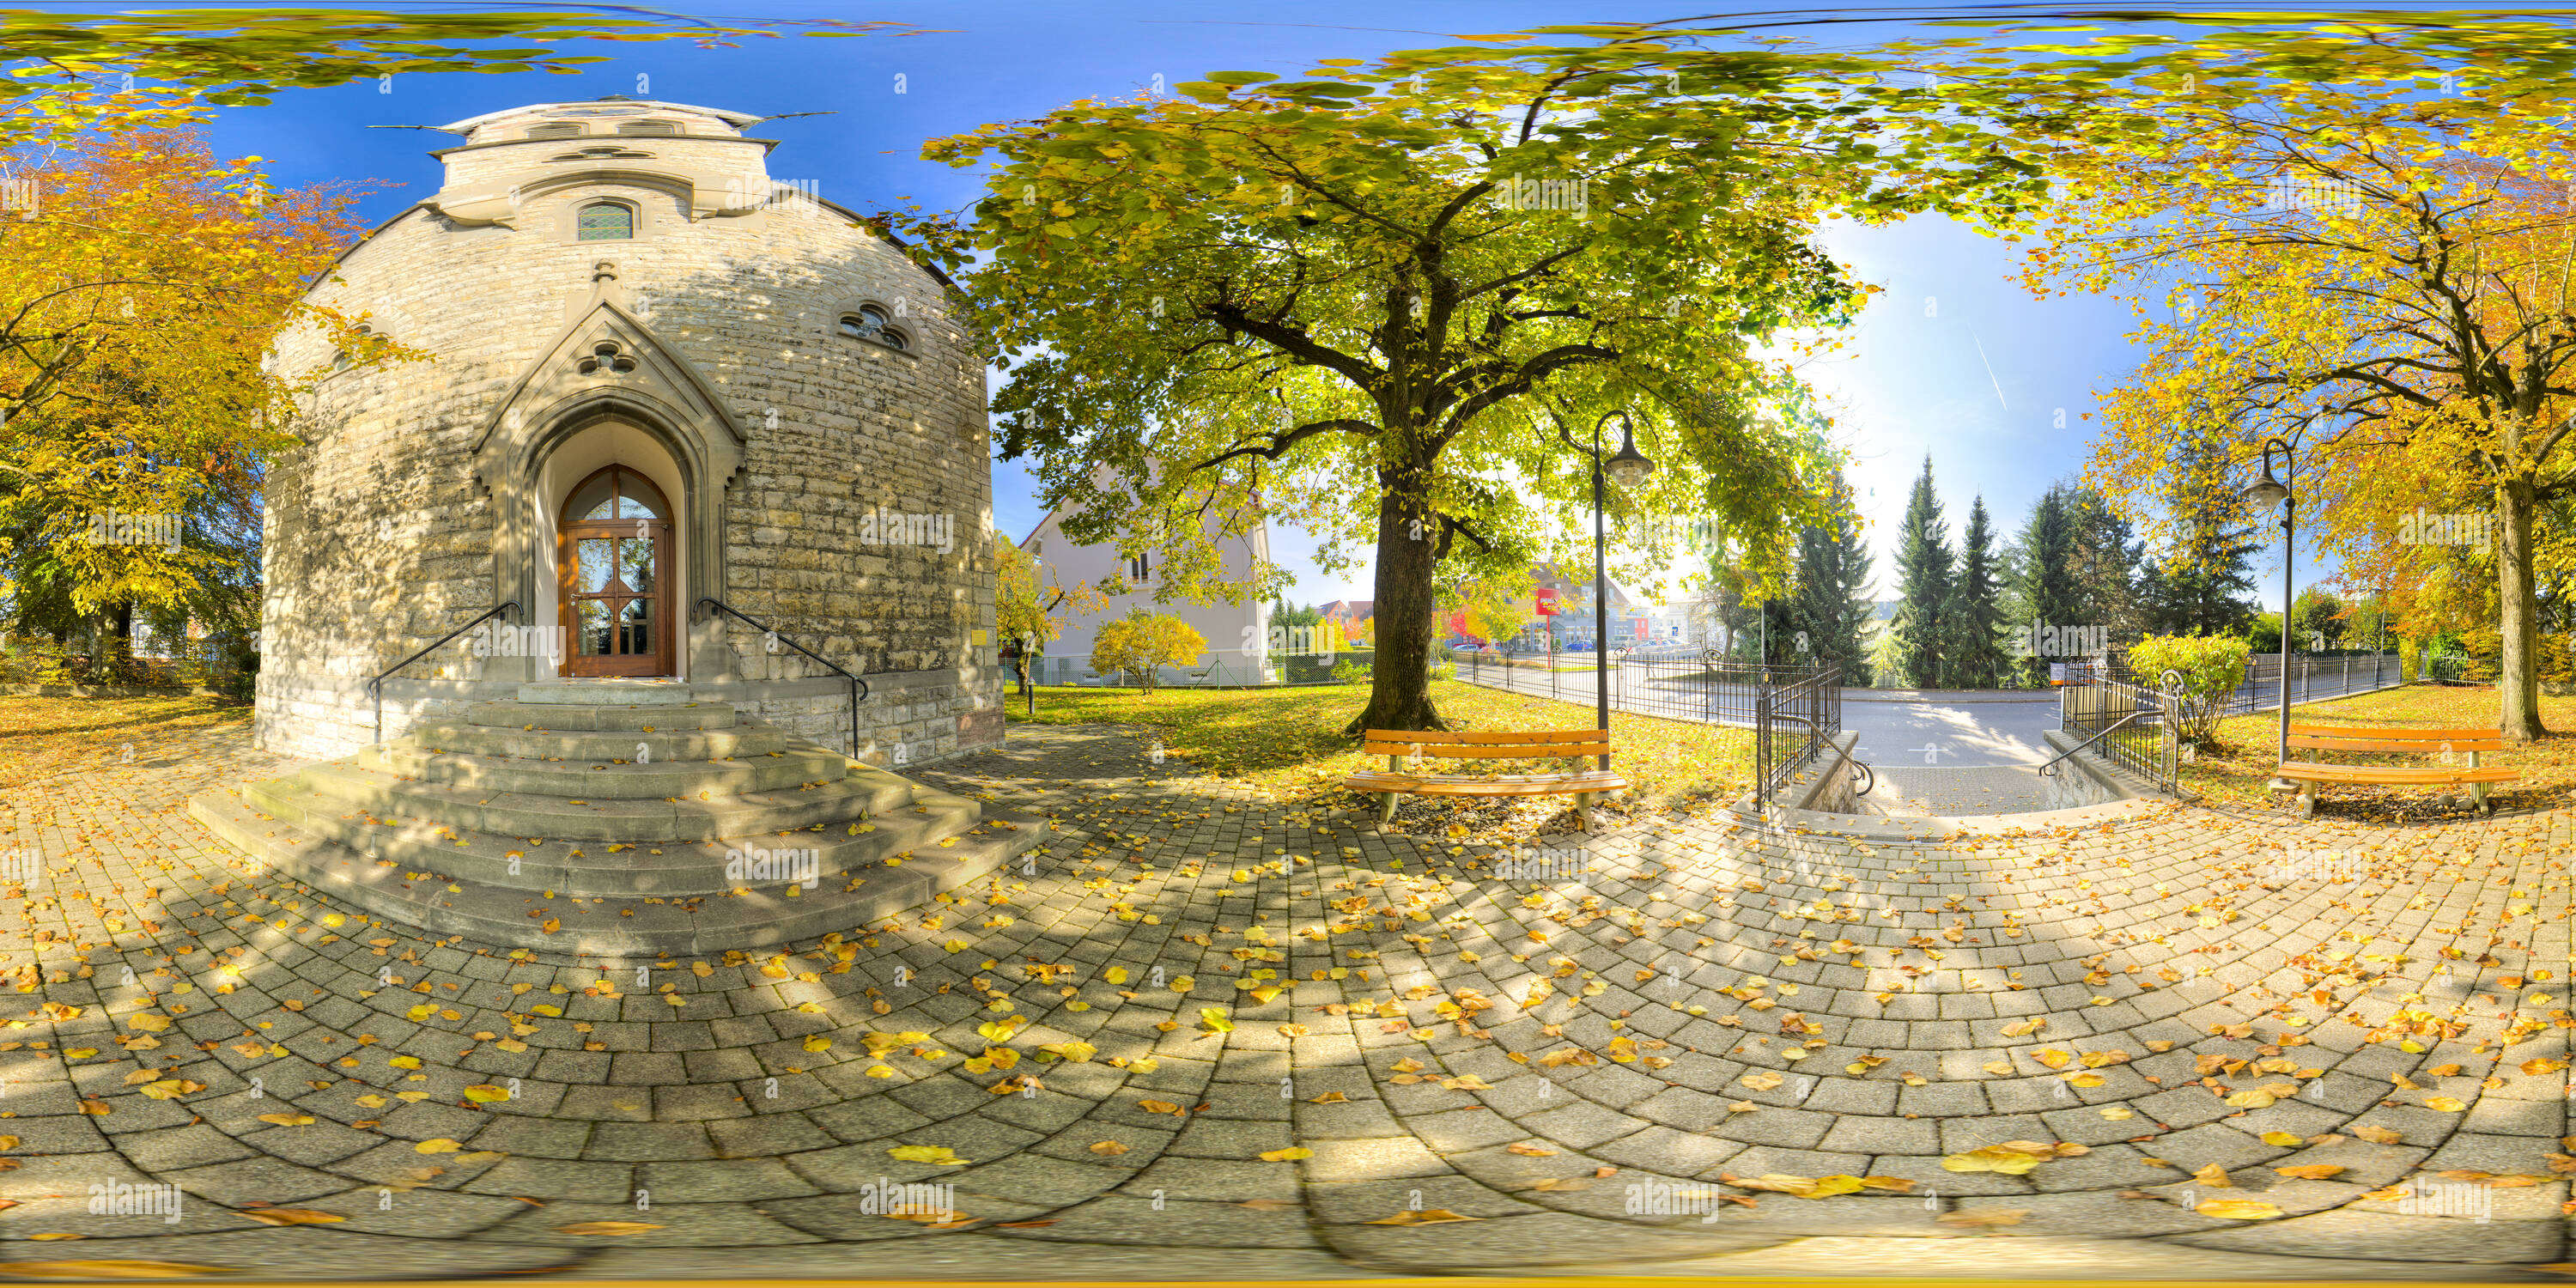 Vista panorámica en 360 grados de Grenzach-Wyhlen Fiedenskirche